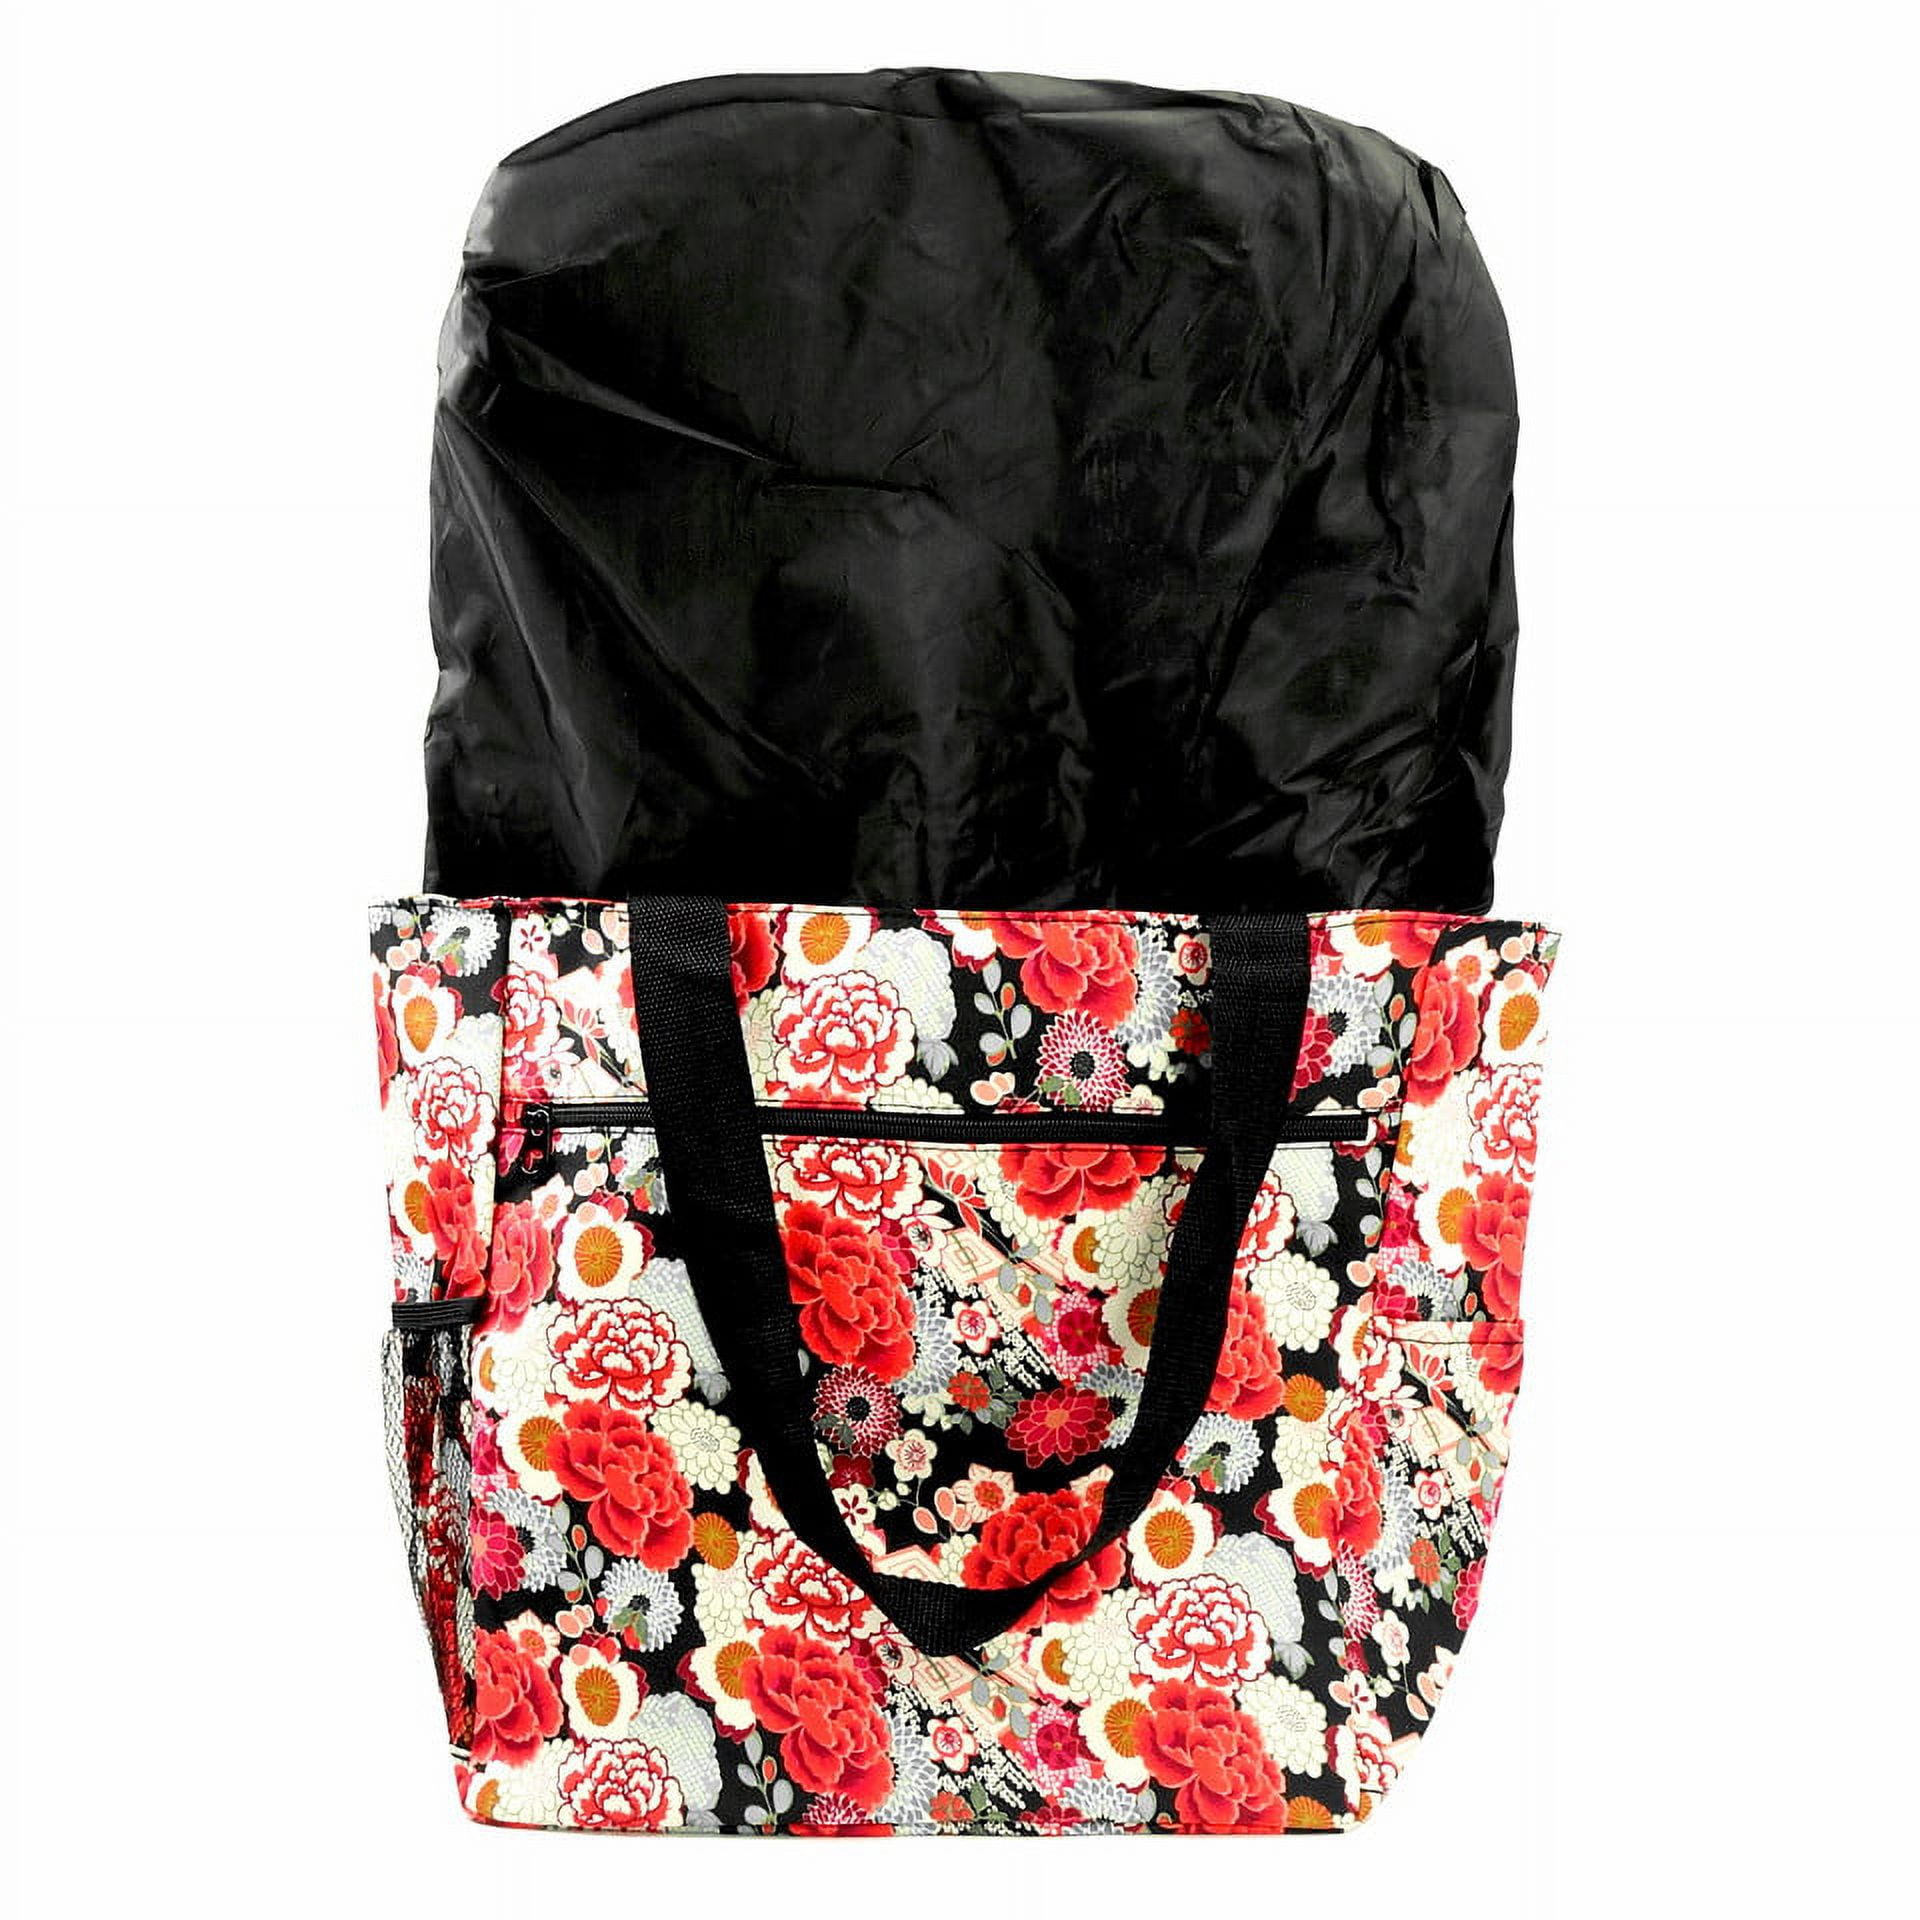 Dark Leopard Multi Purpose Rubber Bag – The Boutique at Wells Florist